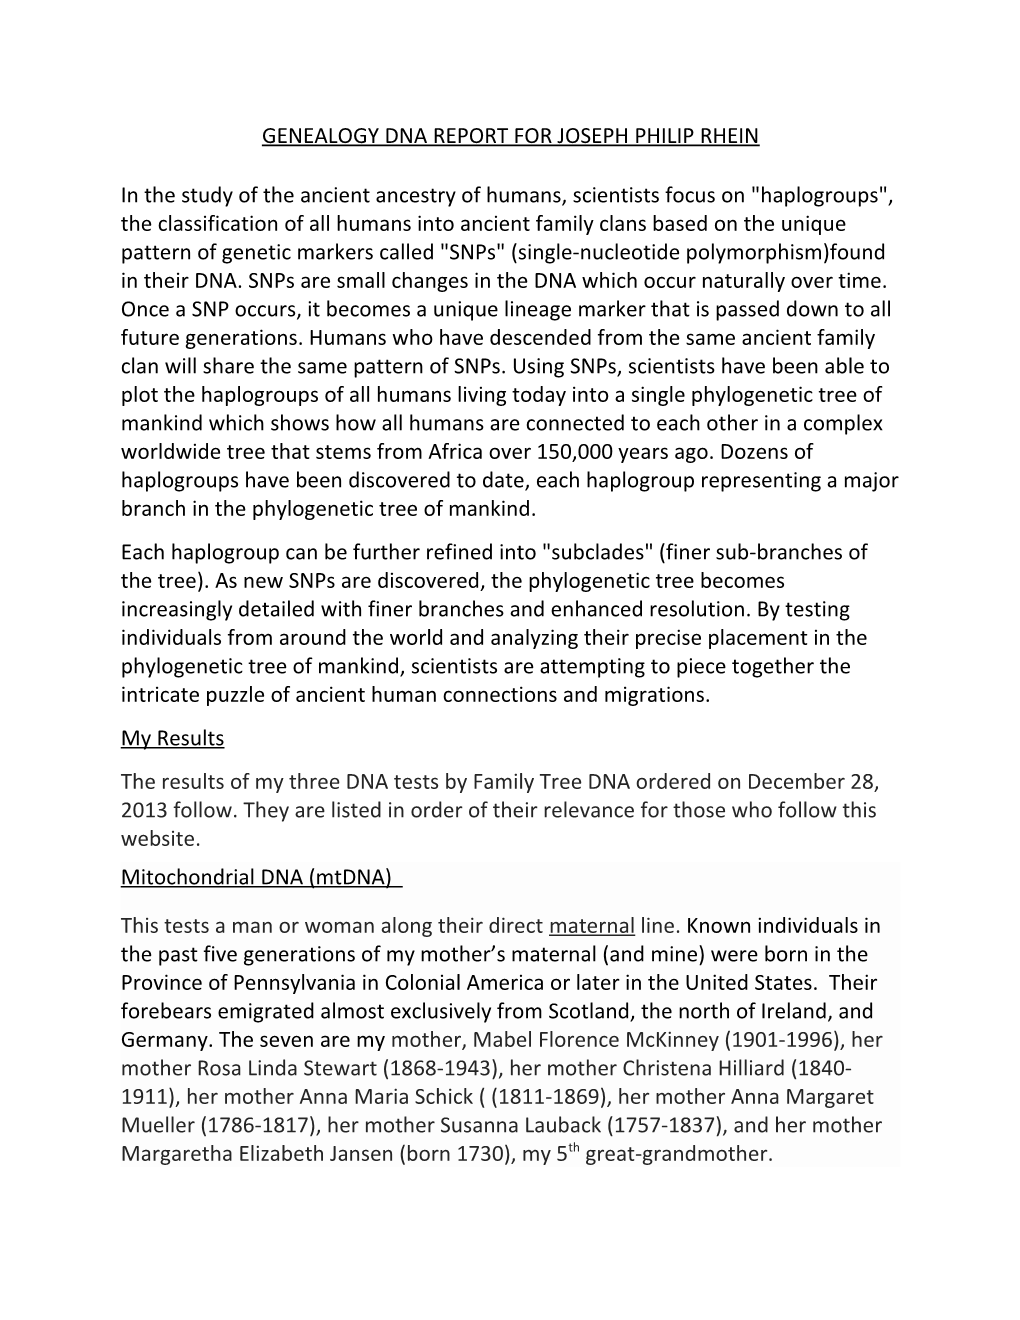 Genealogy Dna Report for Joseph Philip Rhein